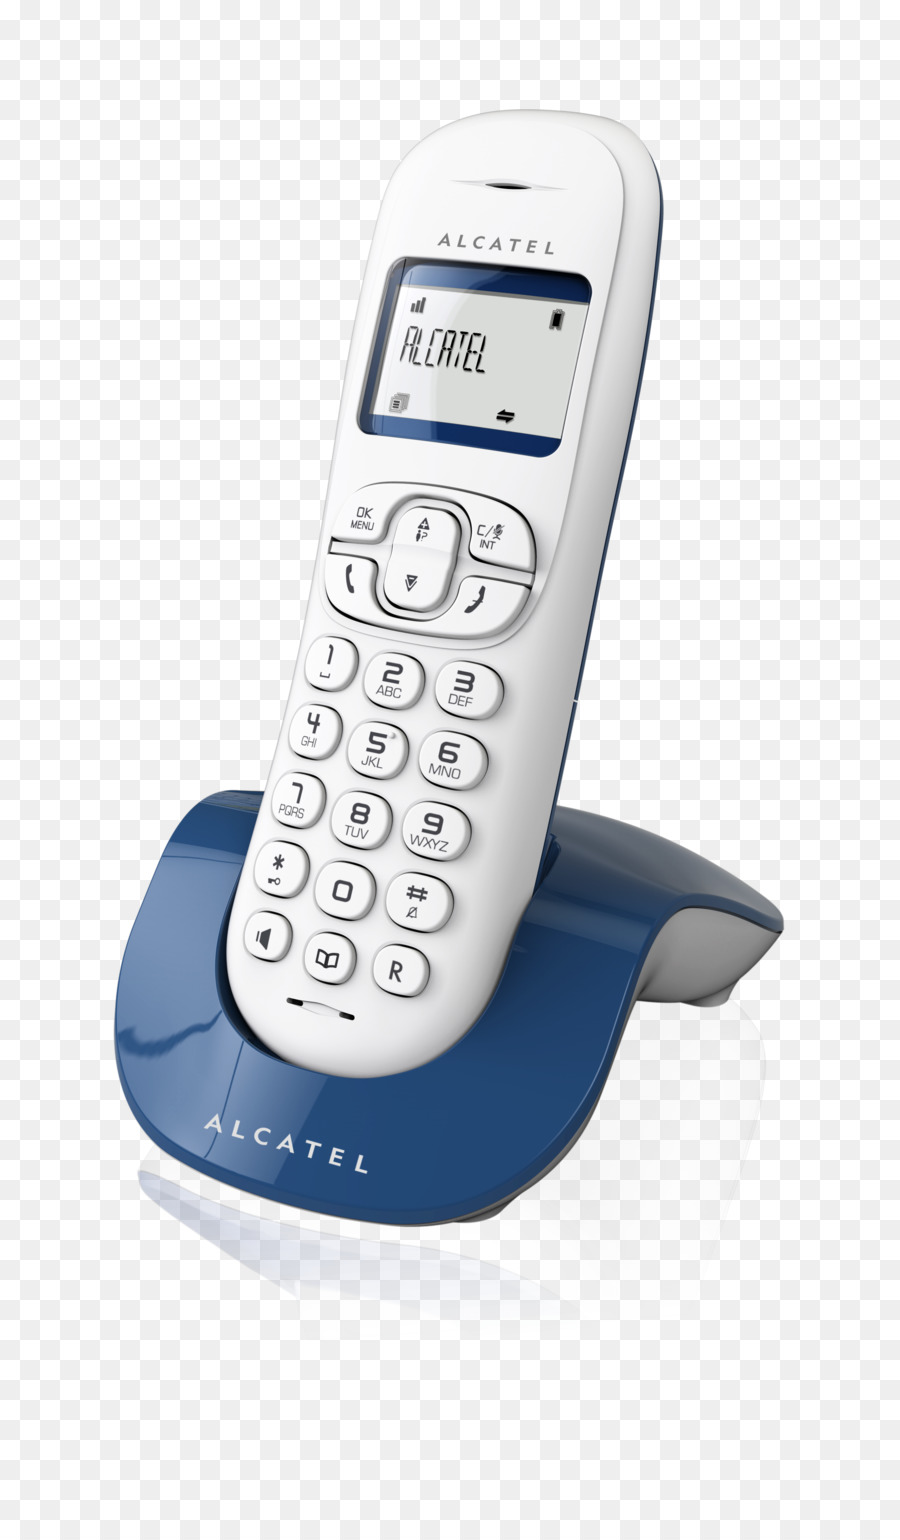 Alcatel Mobile Cordless telephone Home & Business Phones Alcatel C250 schnurlostelefon - andere